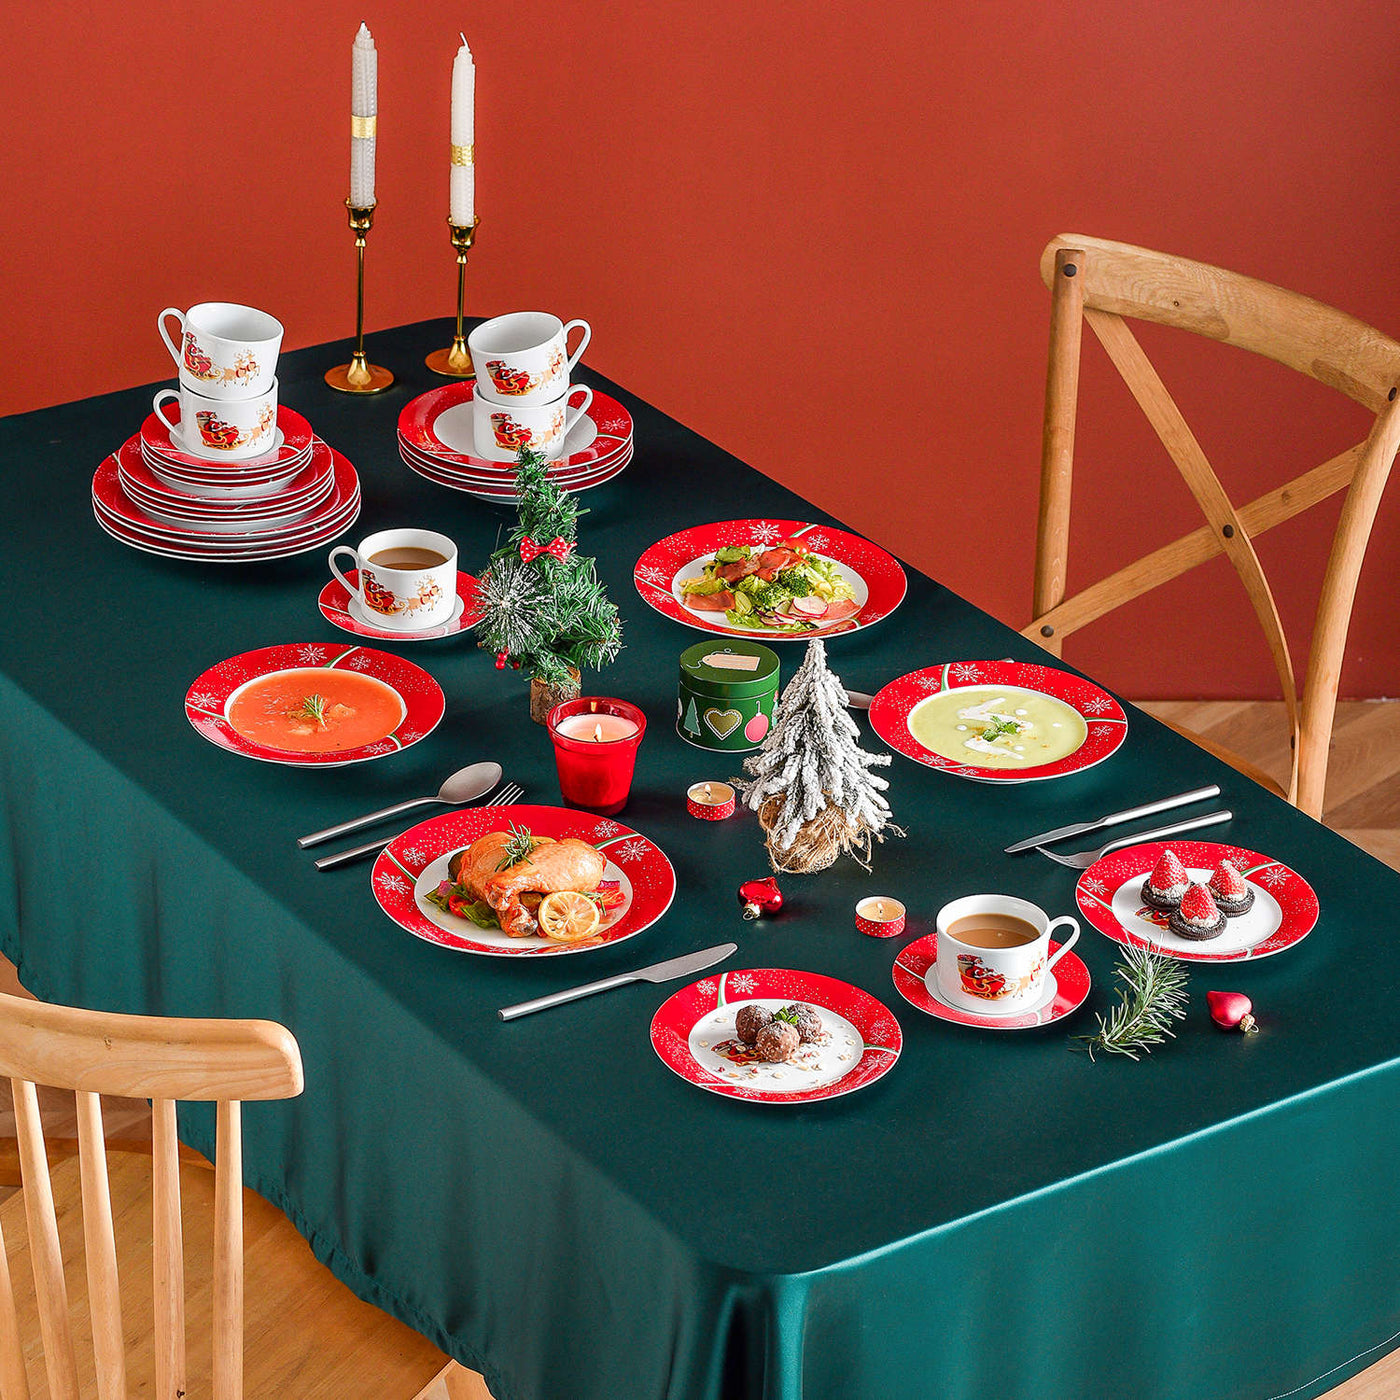 Christmasdeer 30 Piece Dinnerware Set